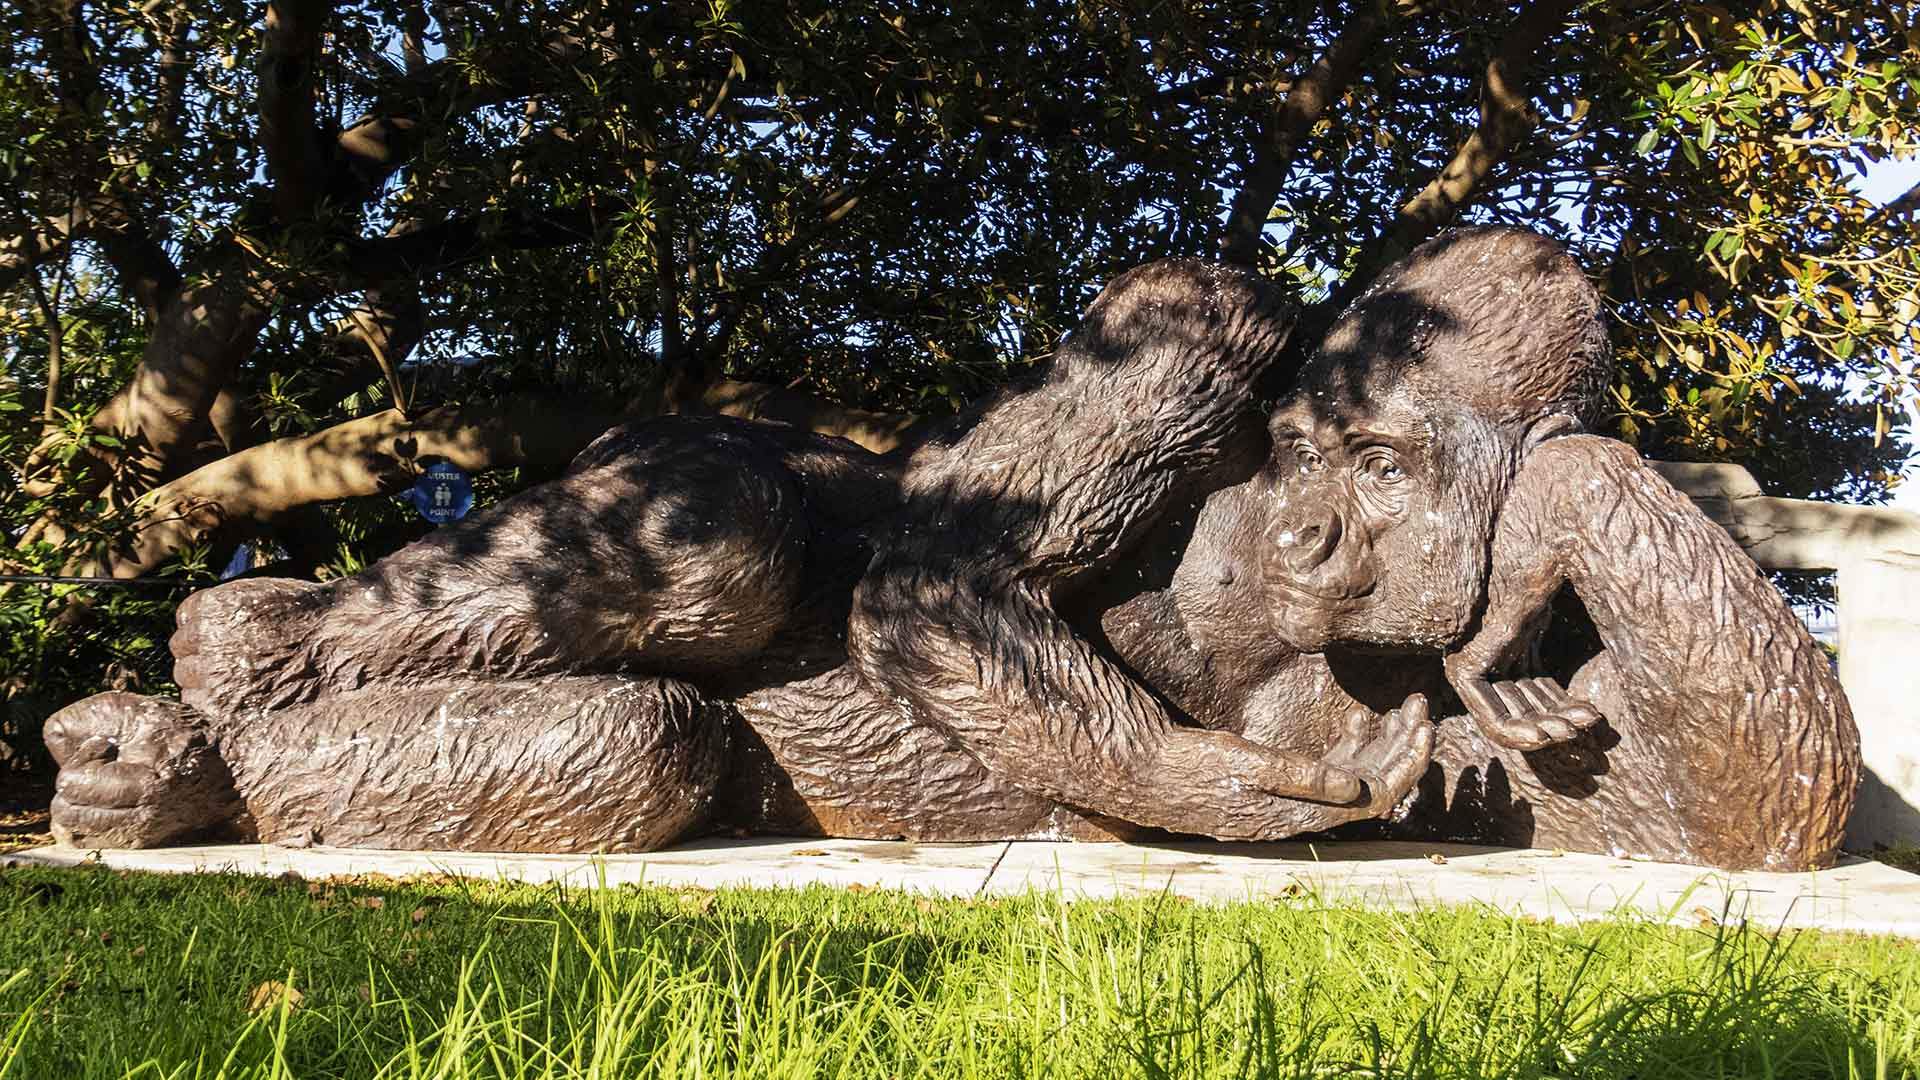 large bronze gorilla statue person sitting